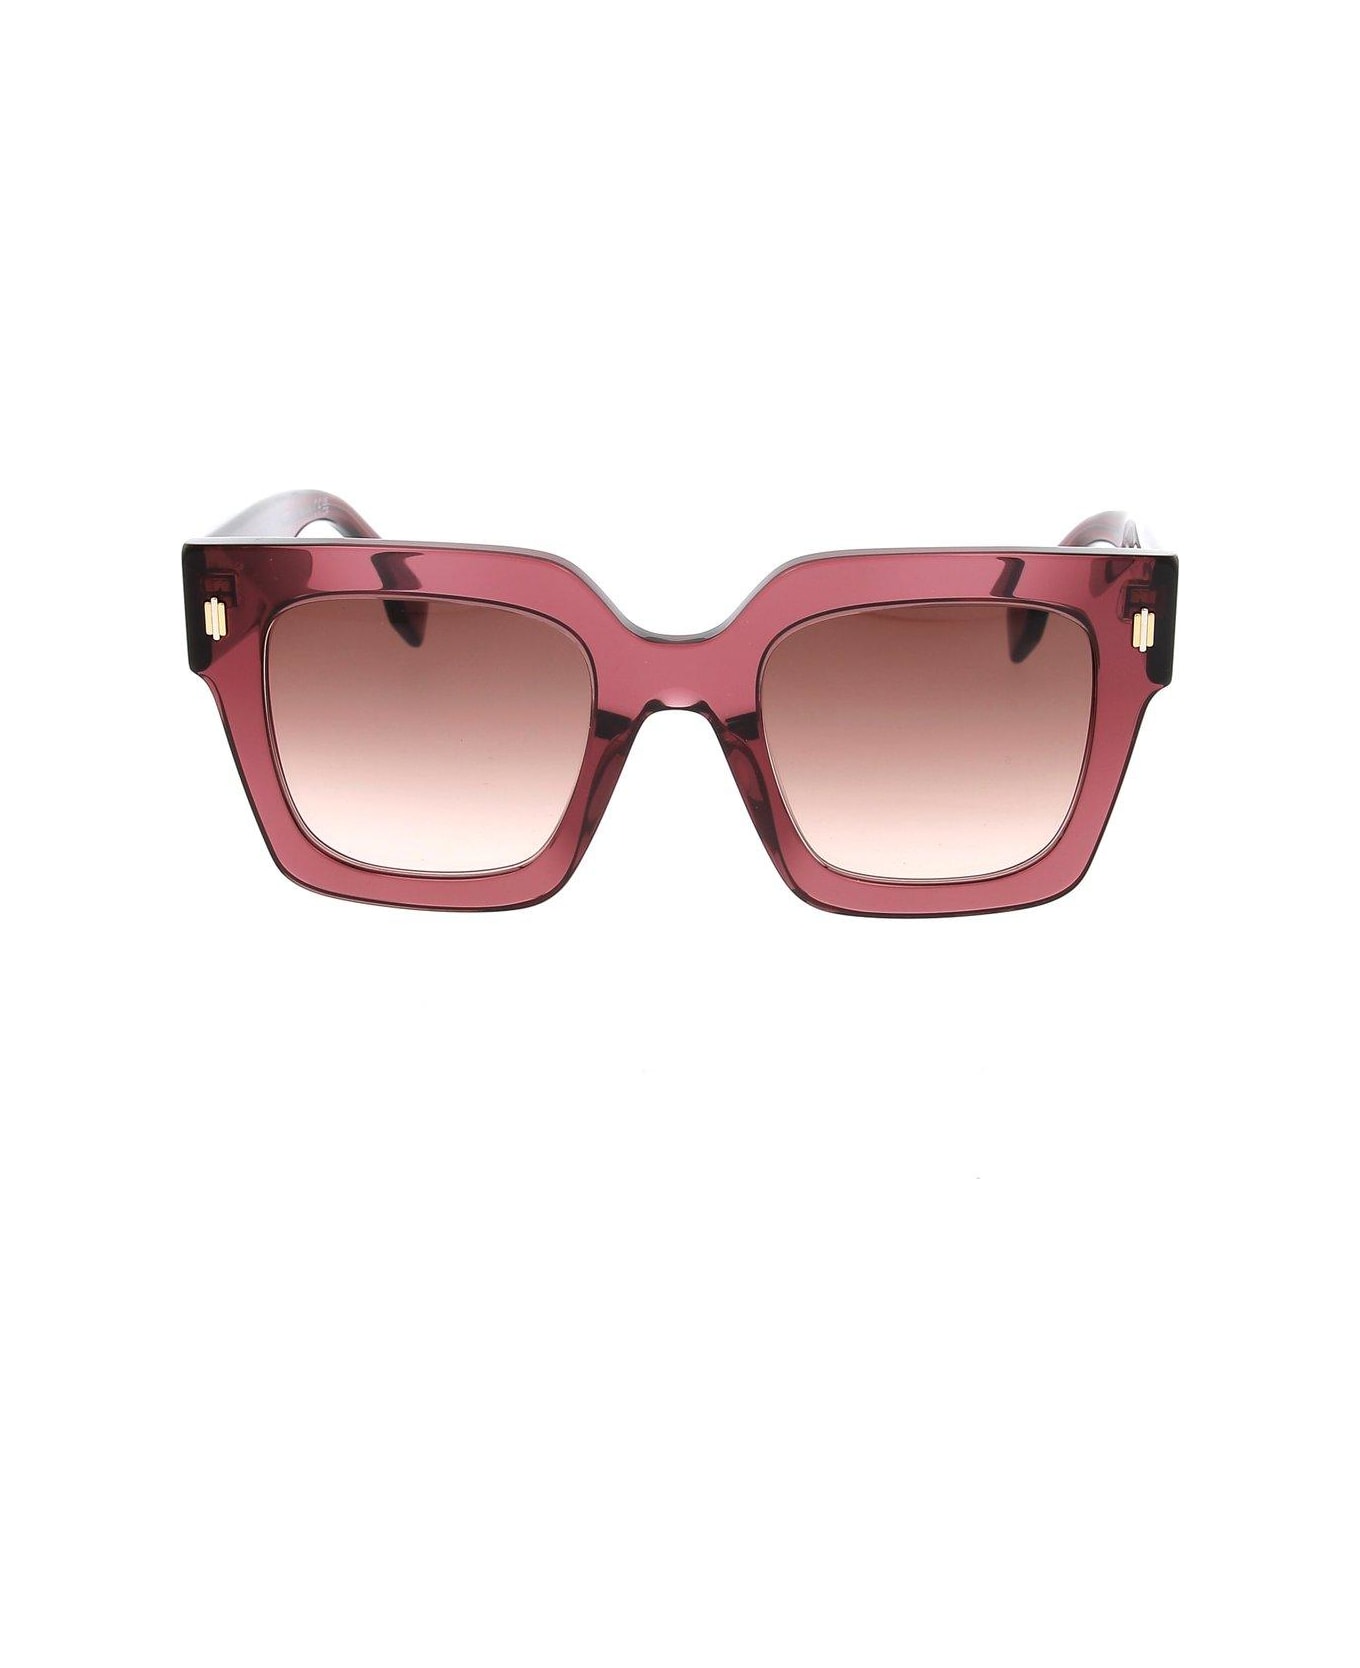 Fendi Eyewear Square Frame Sunglasses - 81f サングラス